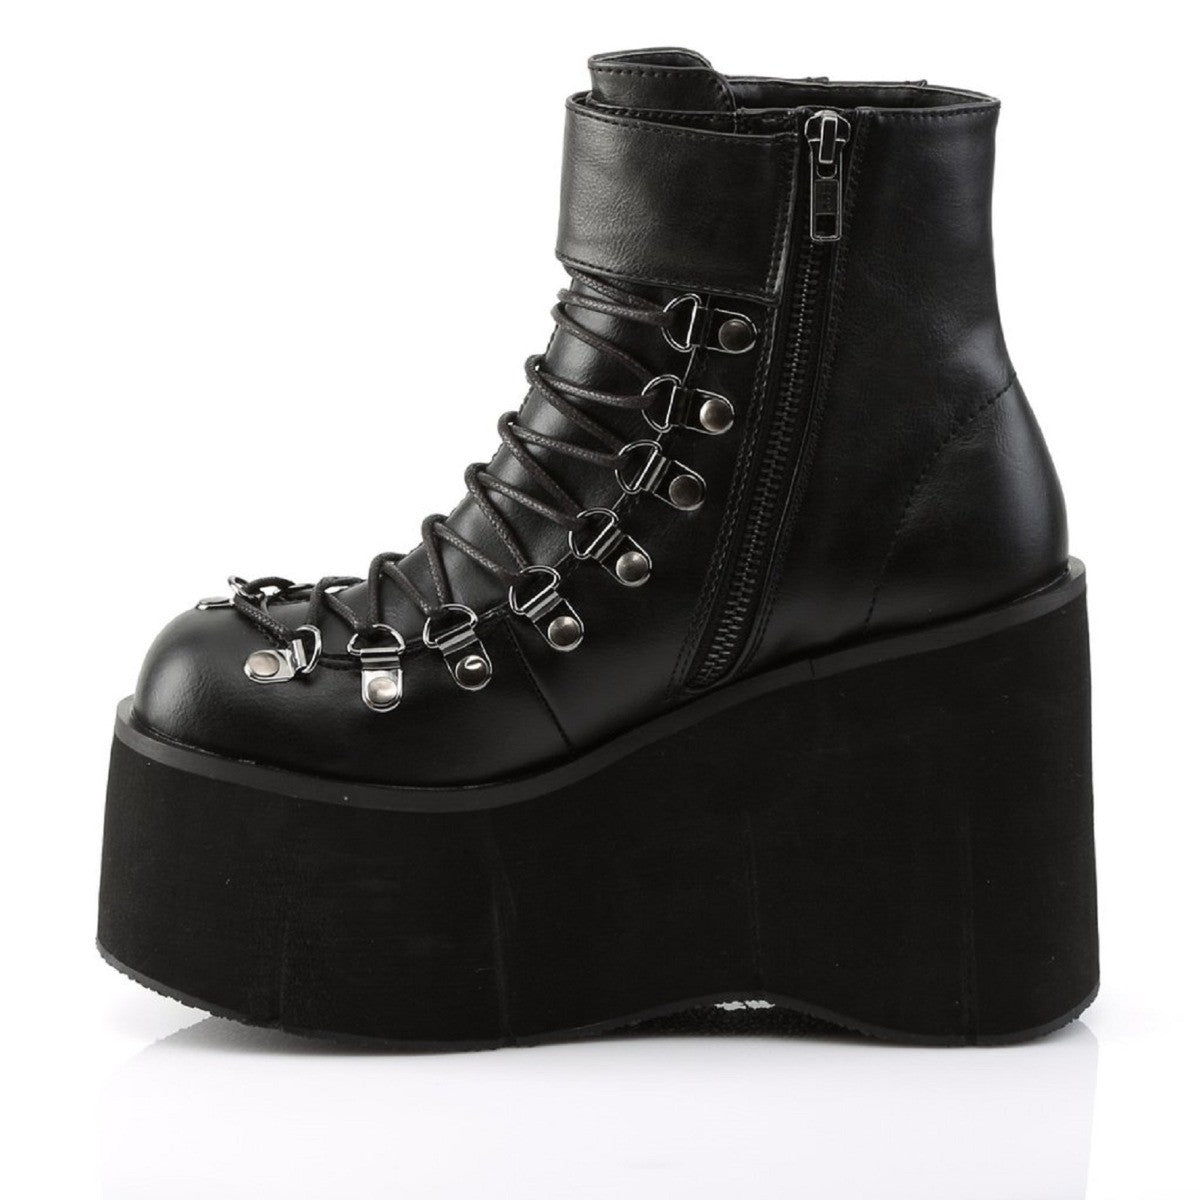 Demonia Kera 21 Gothic Punk Emo Lace Up Platform Ankle Boots